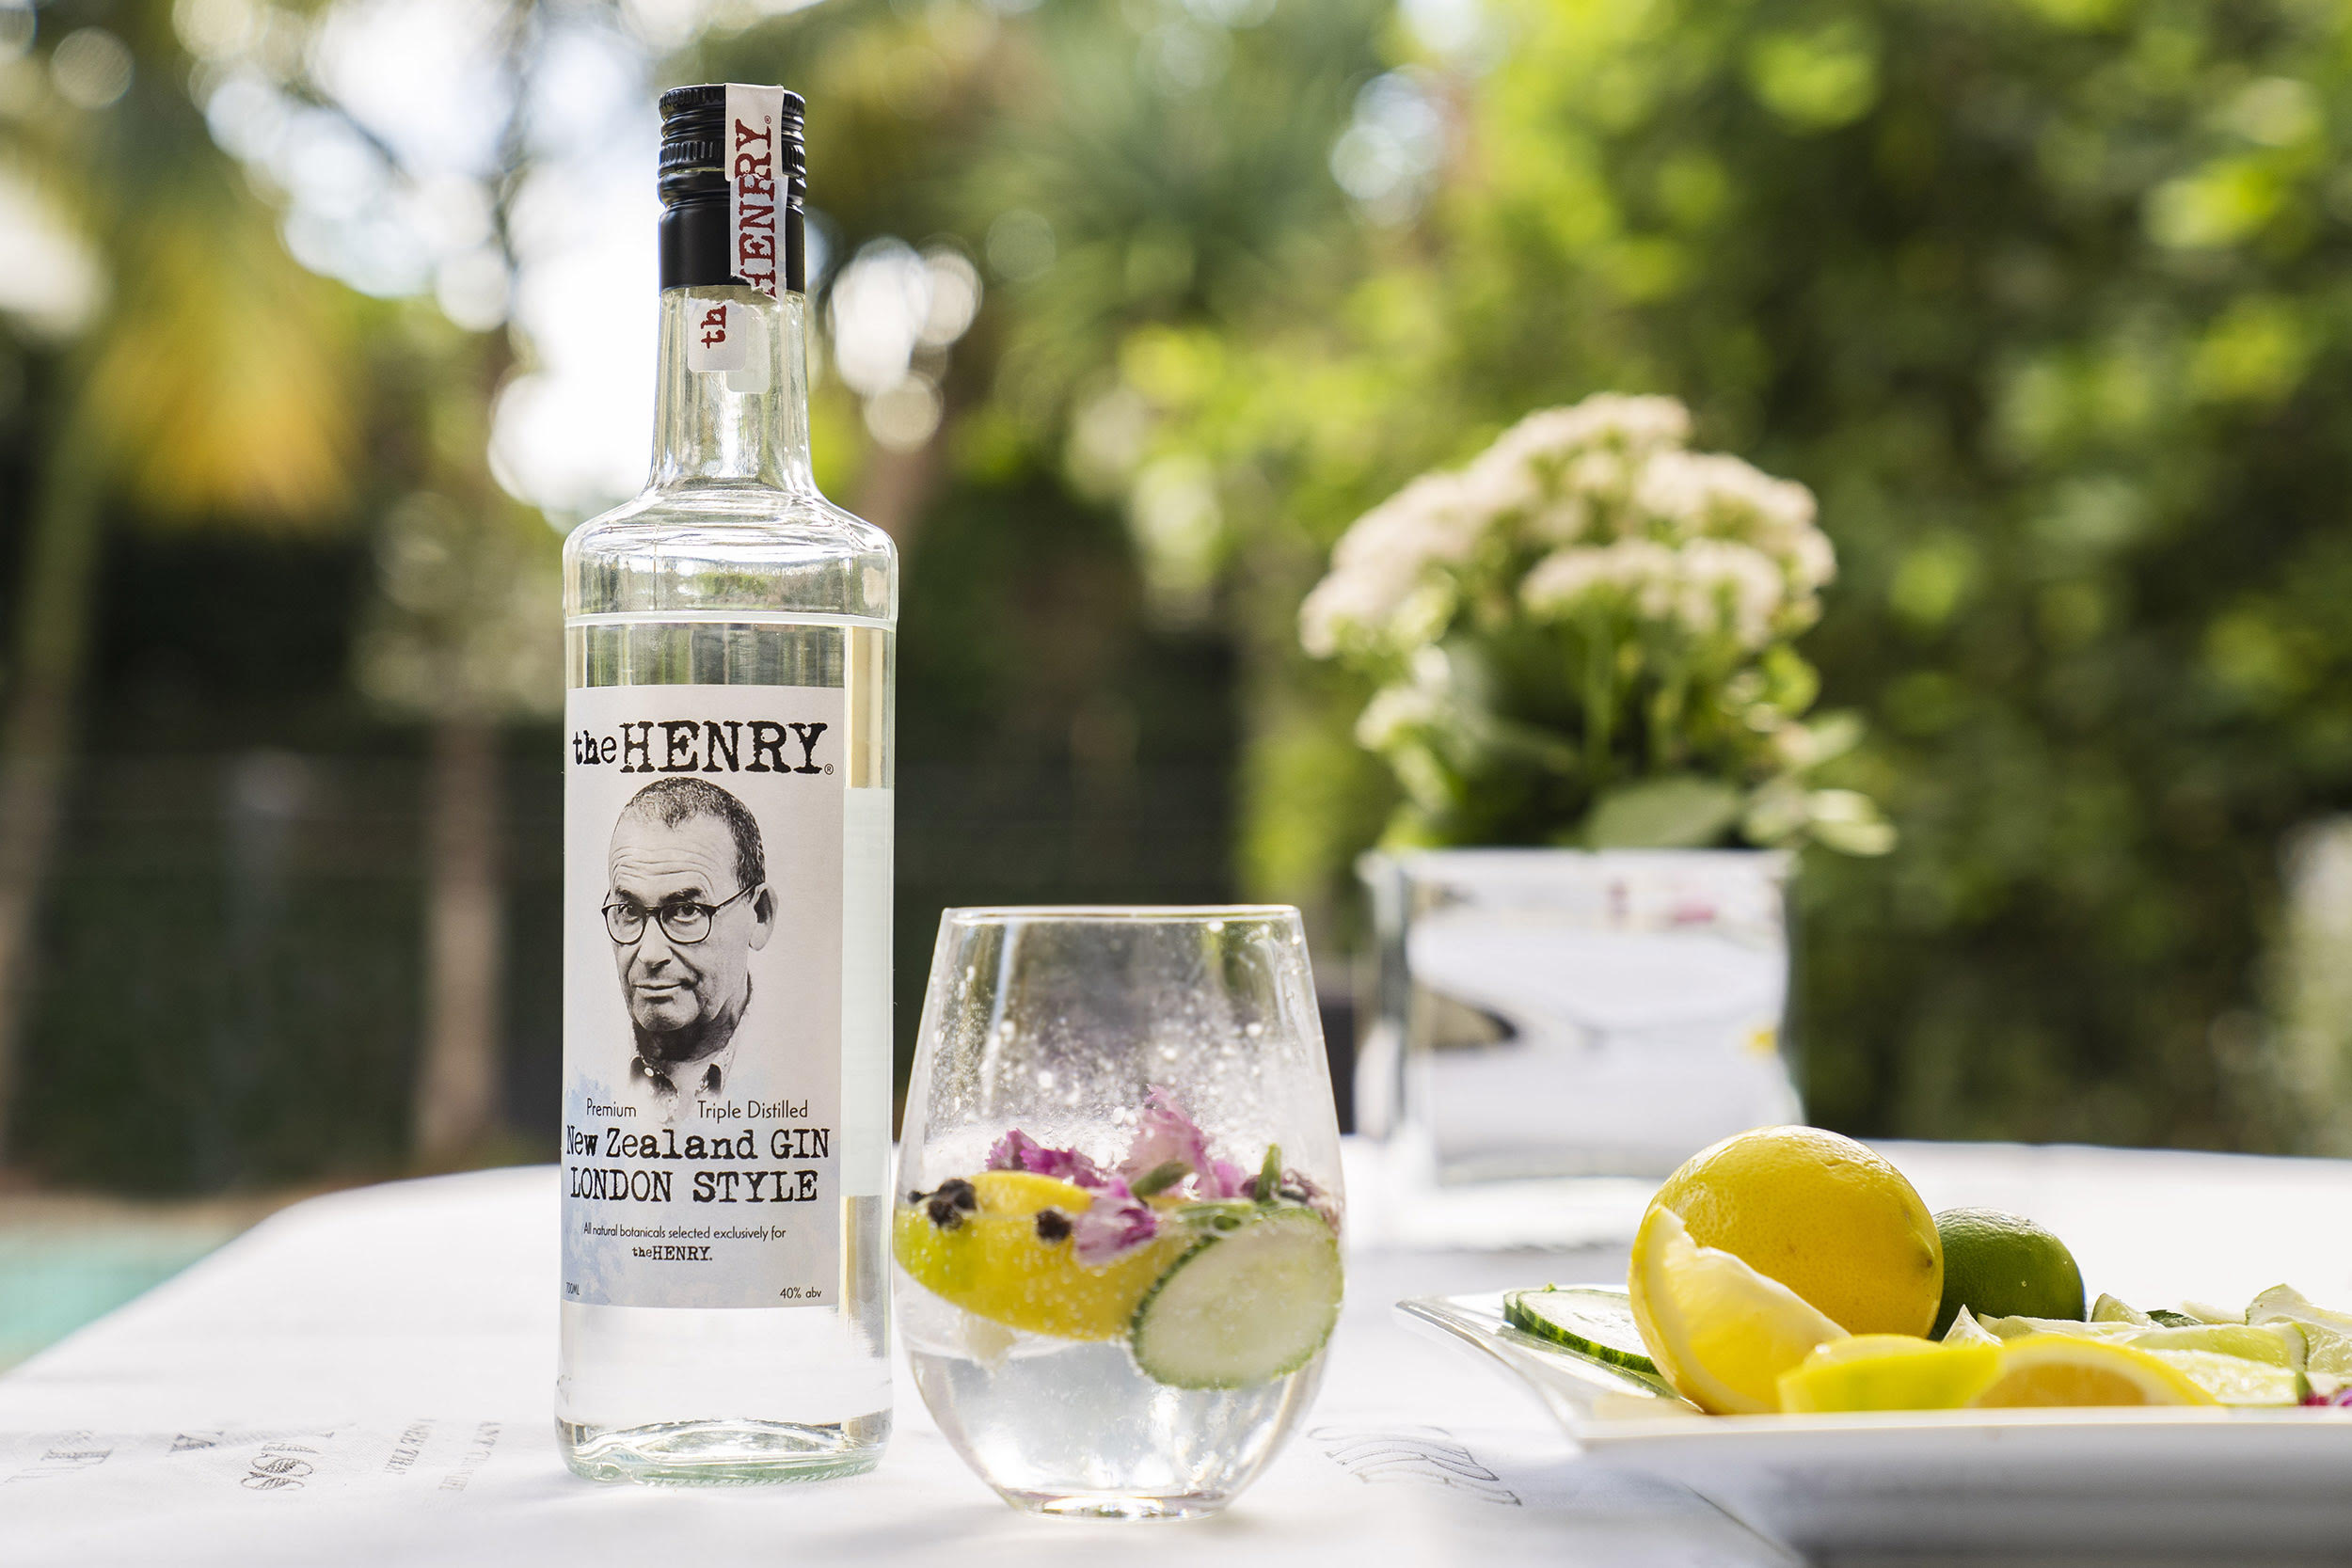 The Henry London Style gin bottle